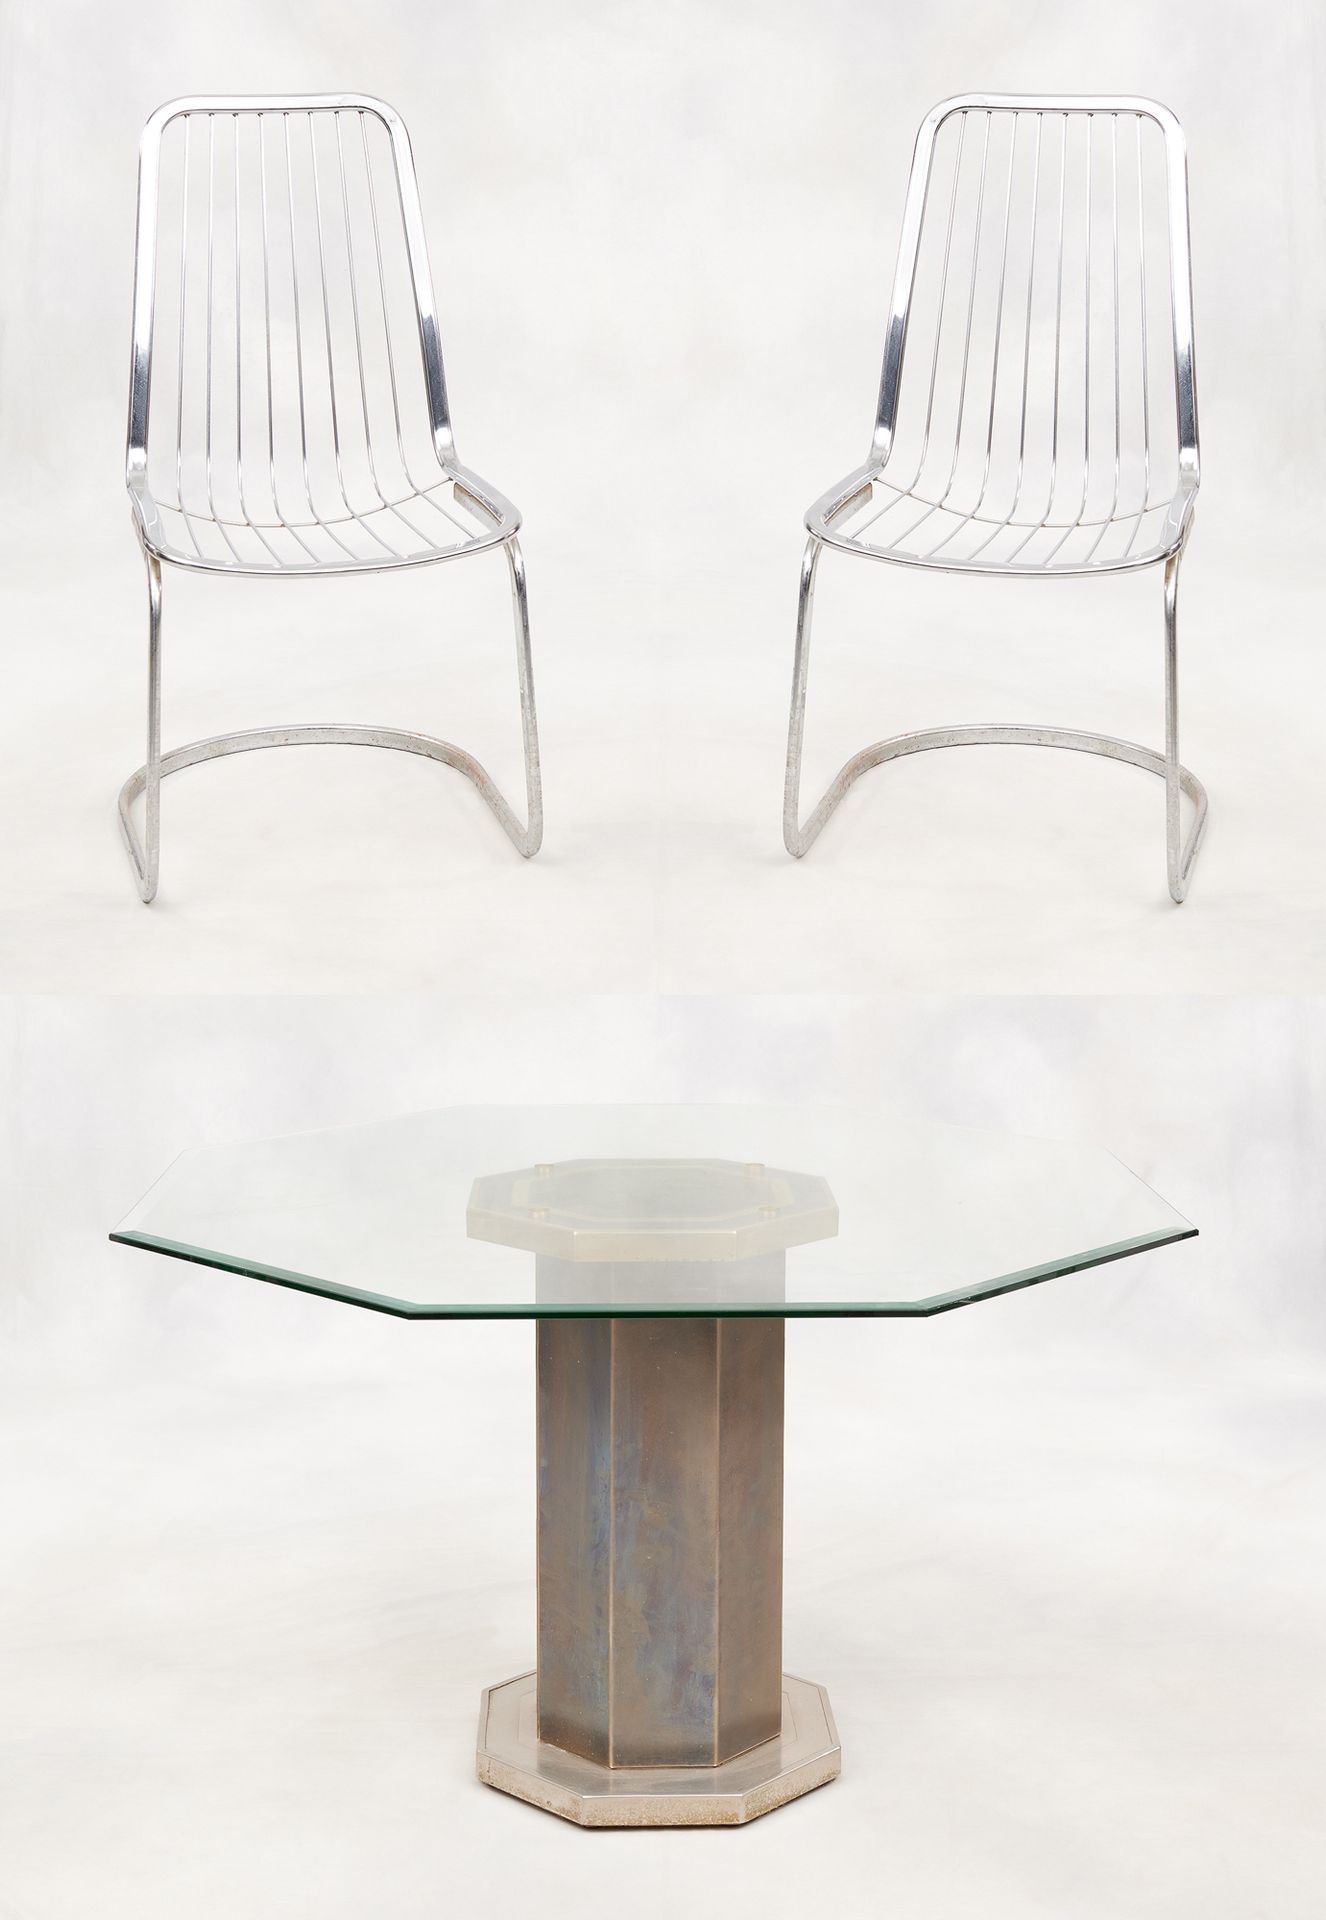 Belgo Chrom, design belge. 家具：套装包括一张八角桌，金属桌腿和斜面玻璃桌面，以及四把镀铬金属椅子。

尺寸：高72.5厘米。